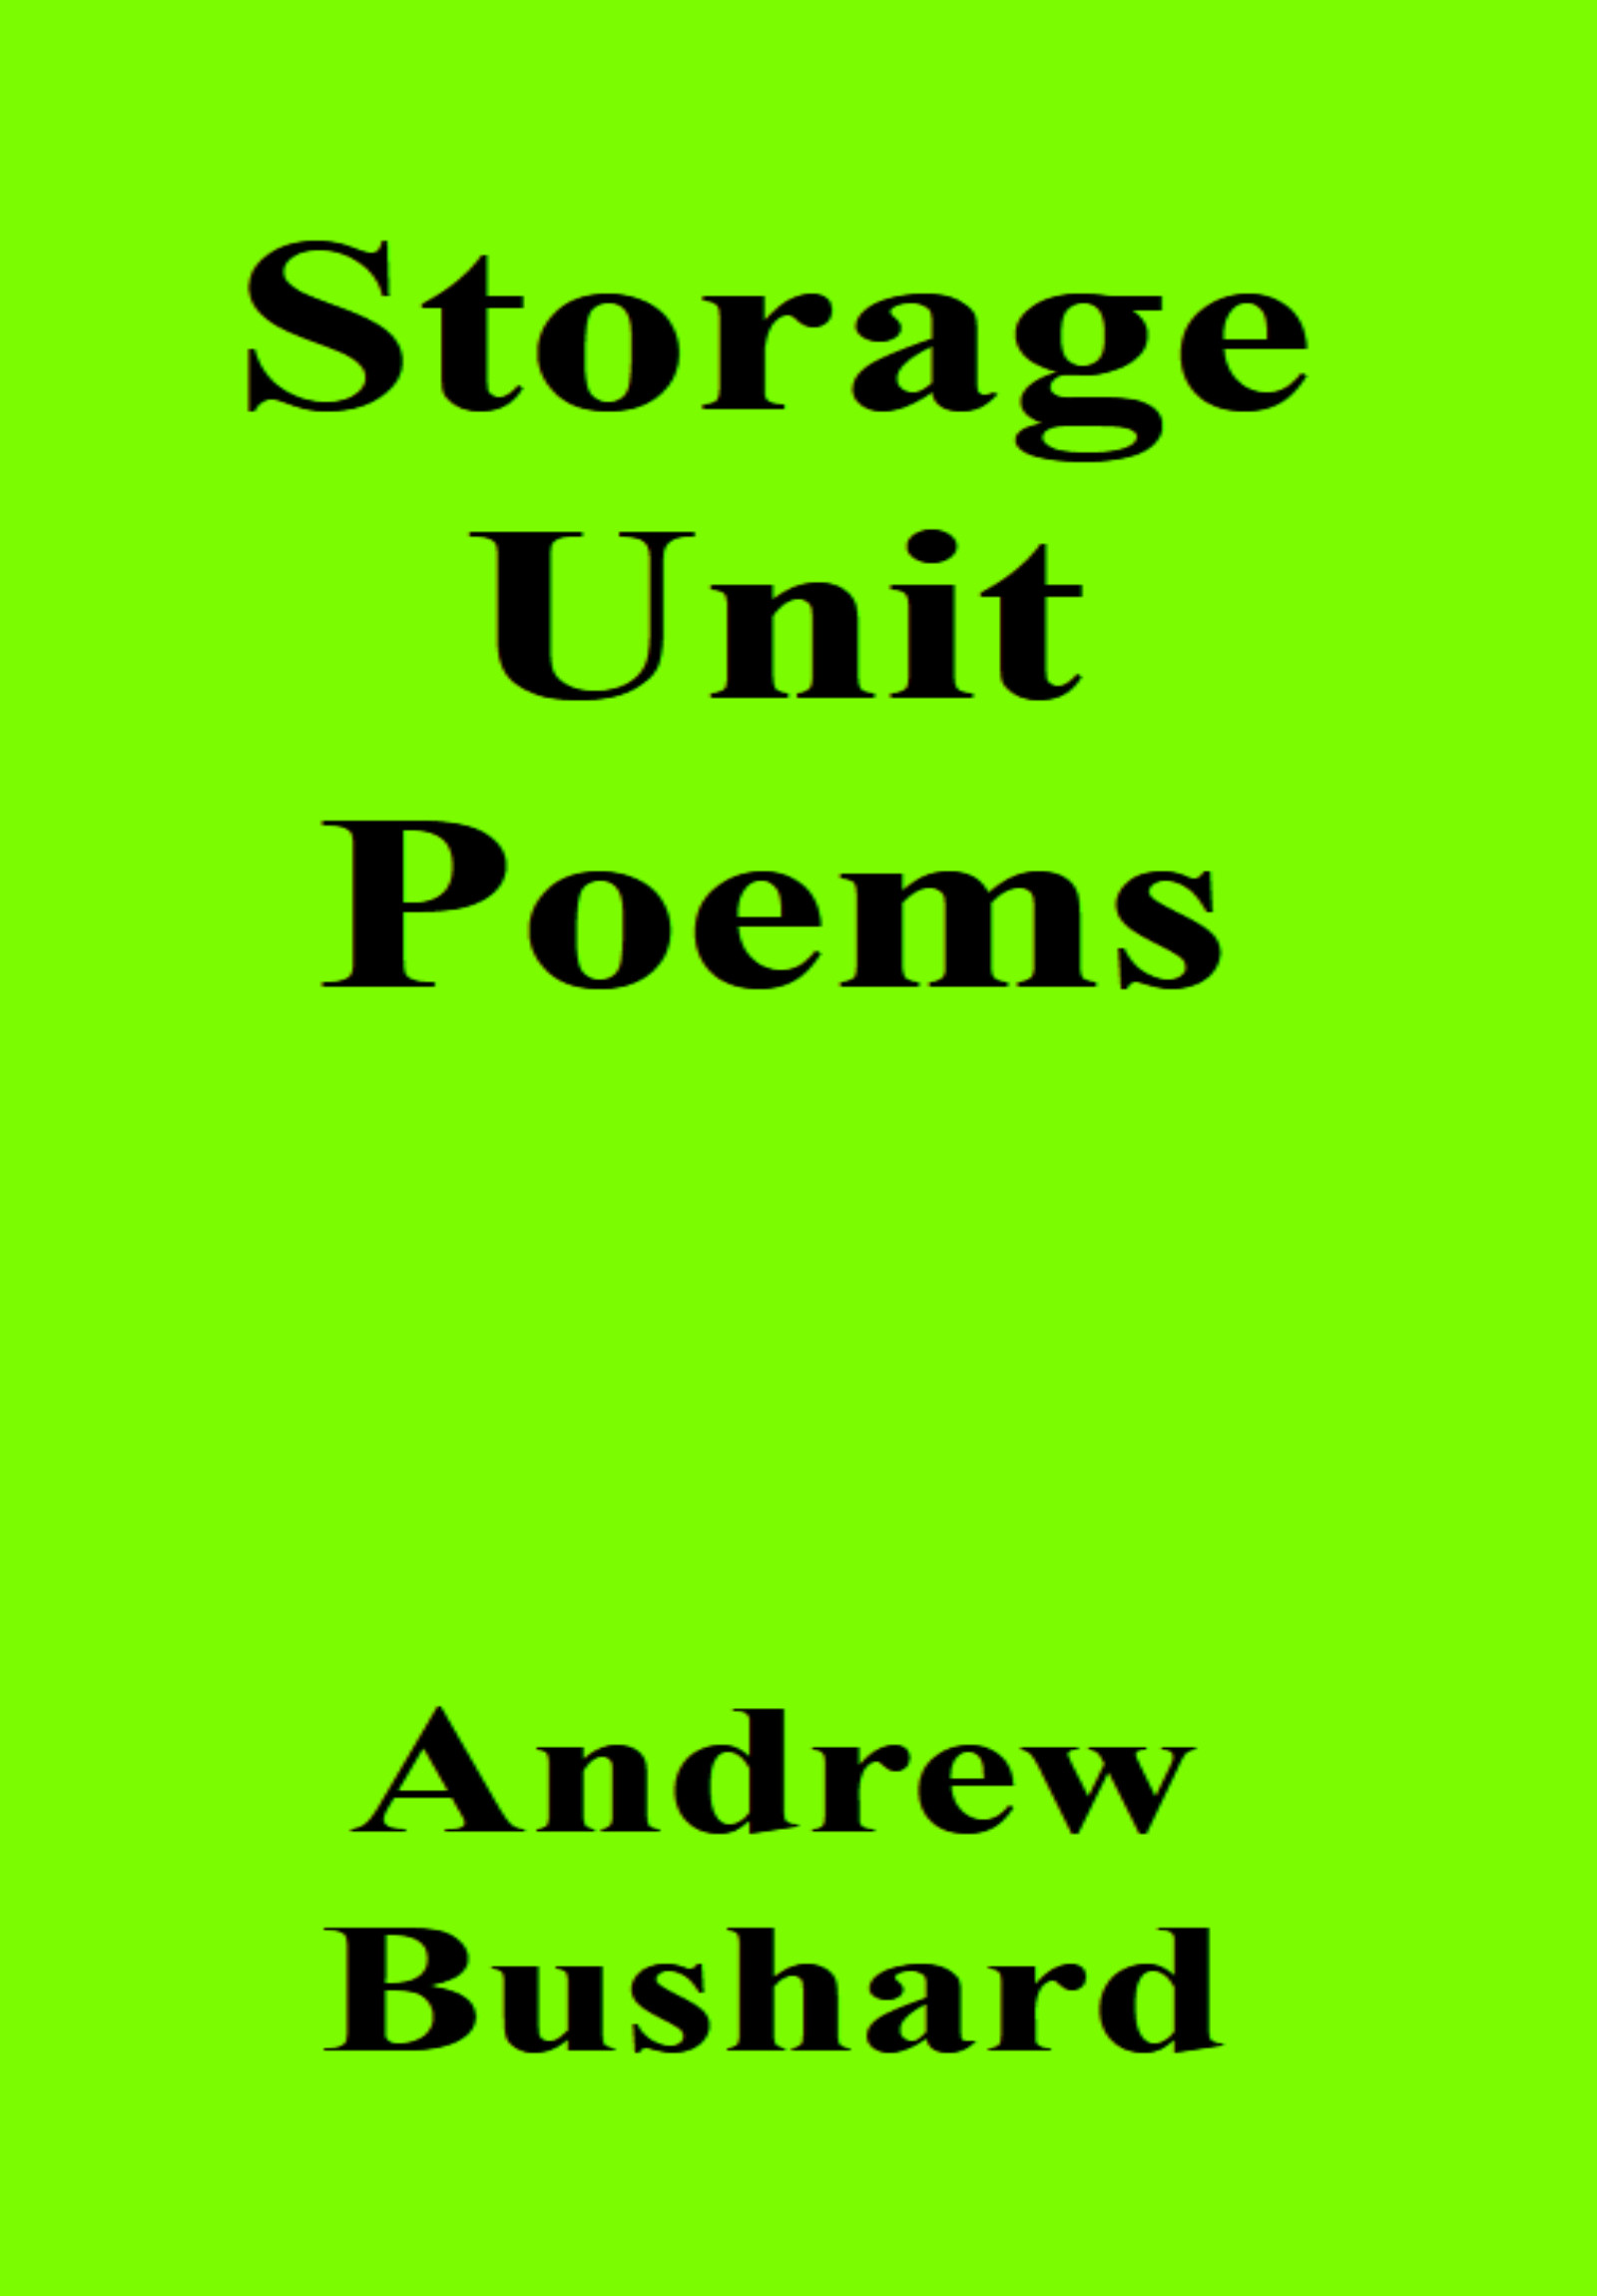 Storage Unit Poems Audiobook